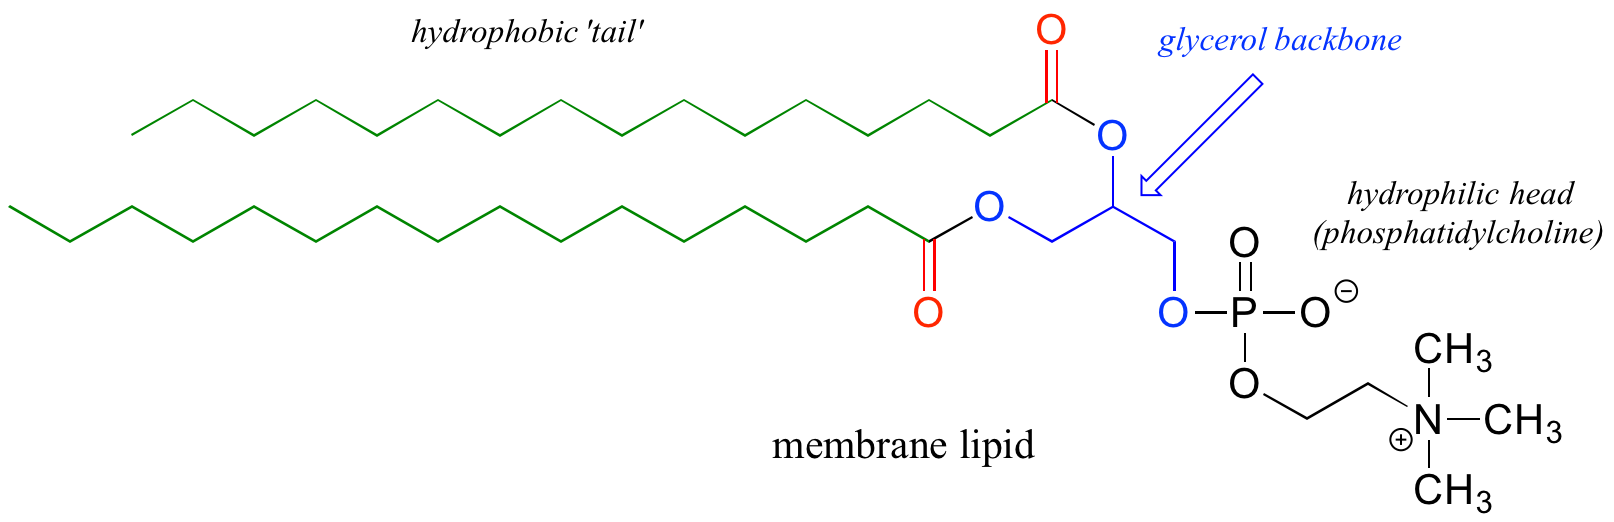 Membrane lipid structure. Hydrophobic tail: carbon chain colored green. Glycerol backbone: glycerol molecule colored blue. Hydrophilic head: phosphatidylcholine attached to glycerol backbone colored black.